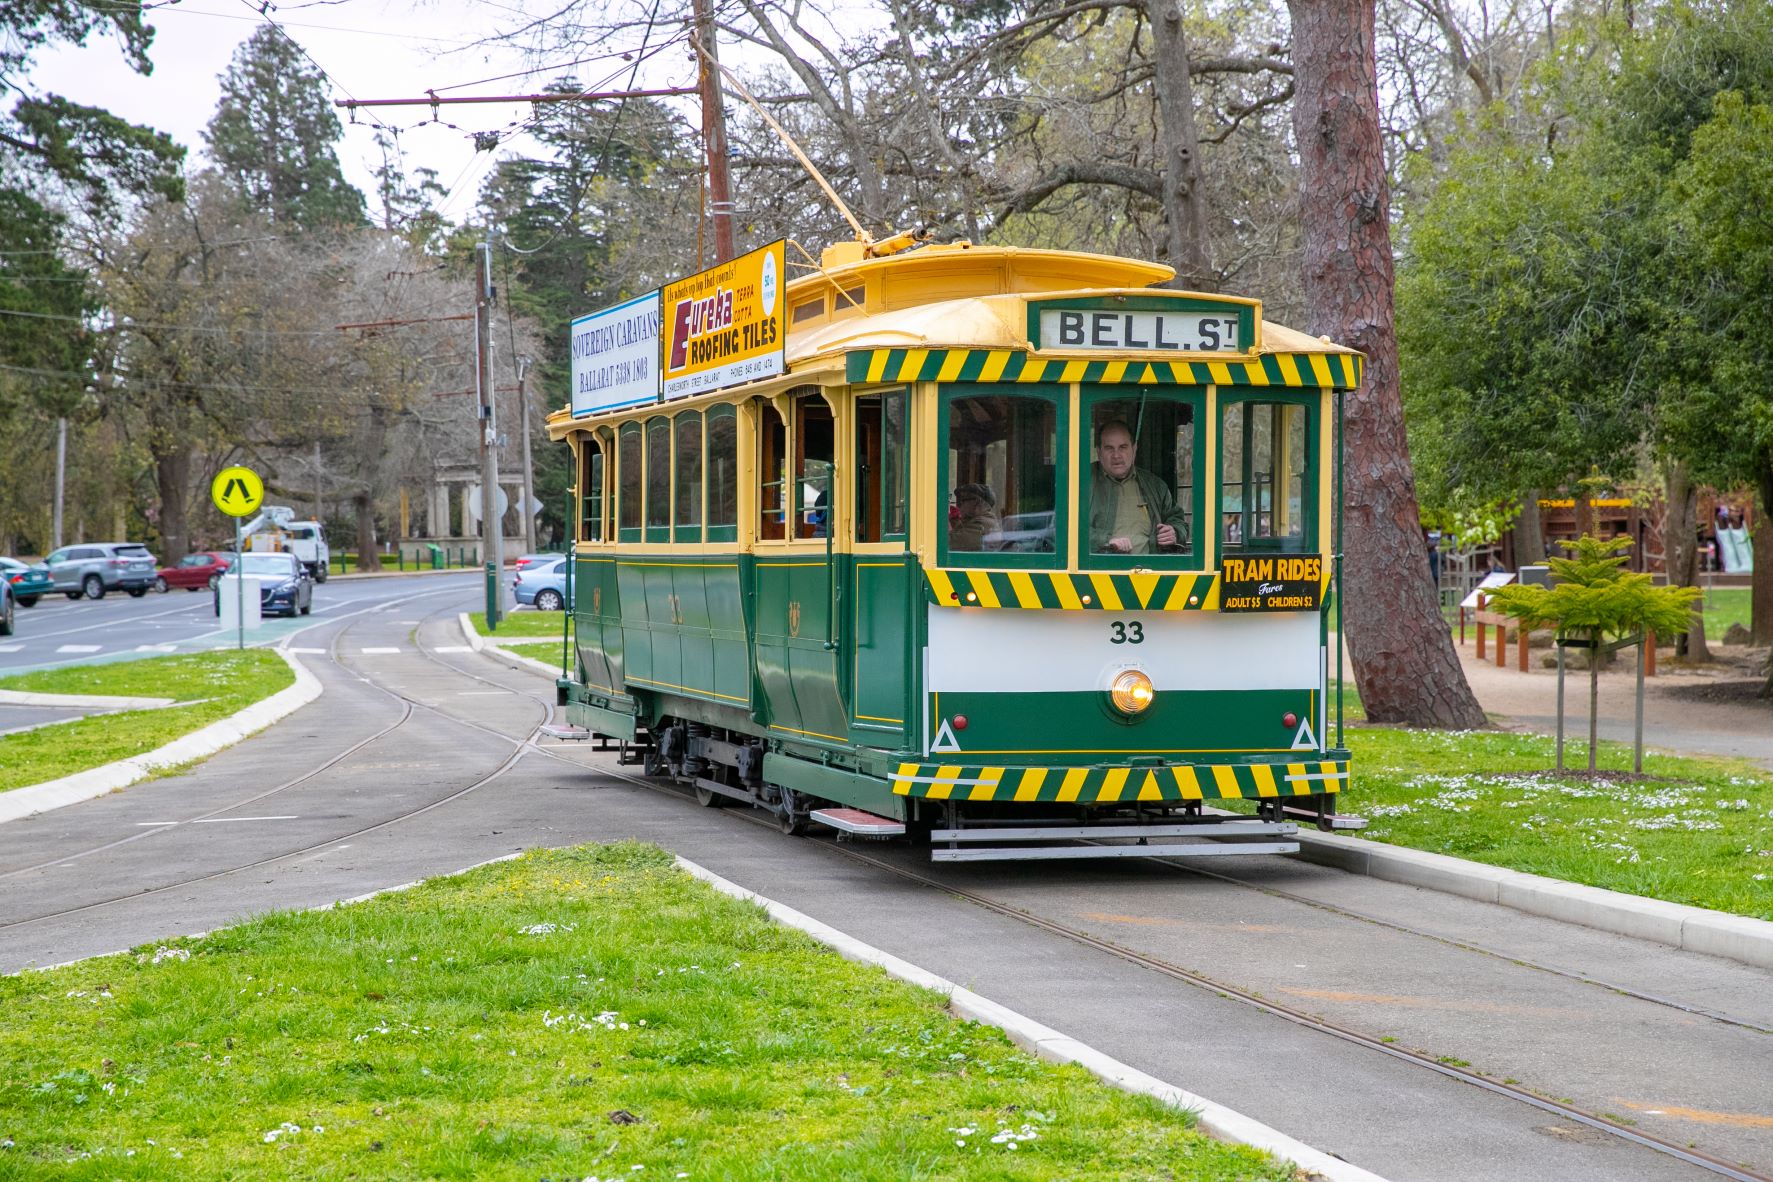 Green and yellow tram on the tracks near Lake Wendouree